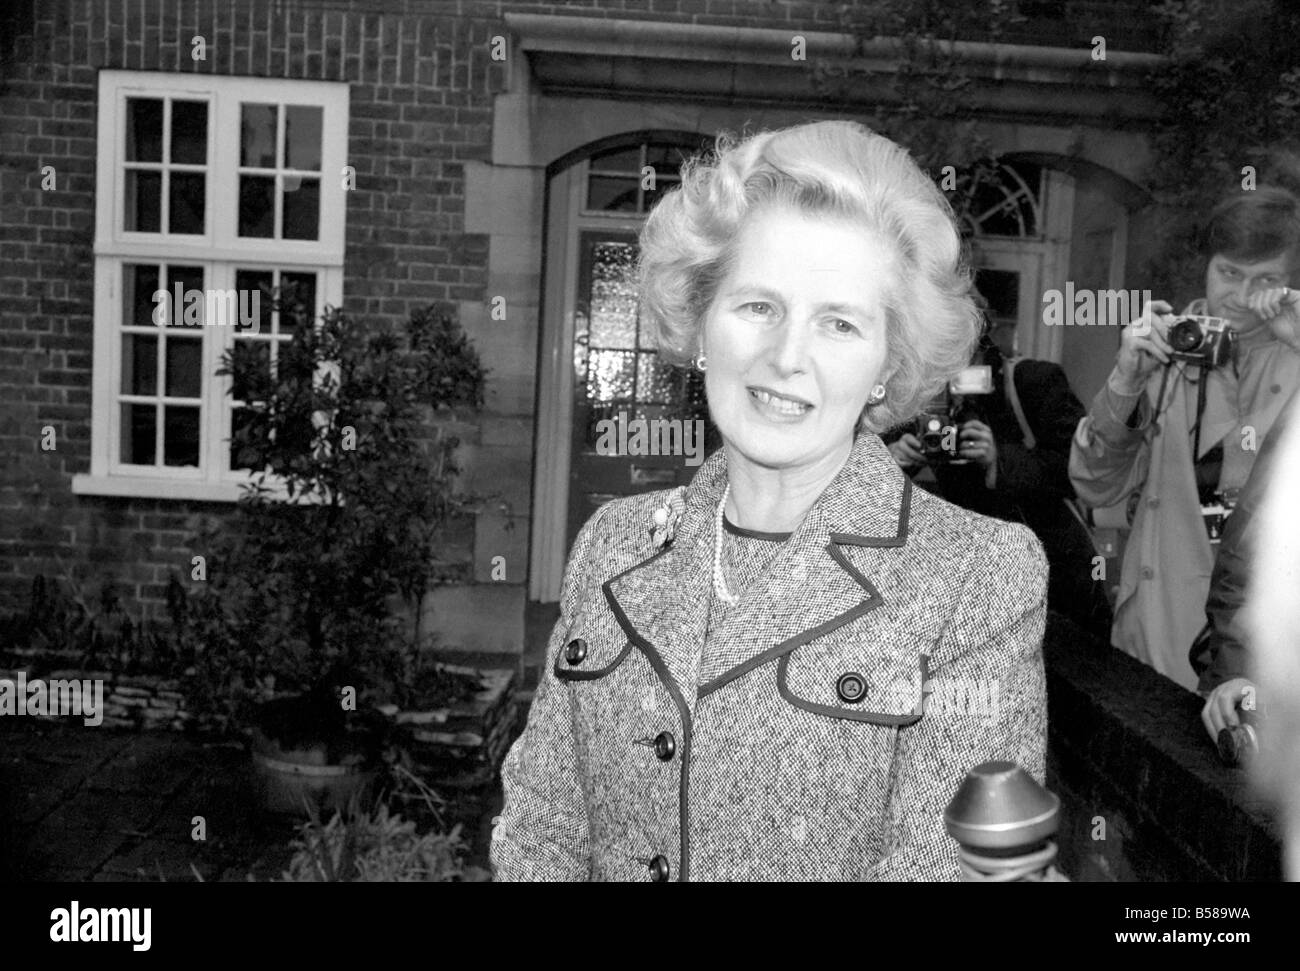 Mrs. Margaret Thatcher. February 1975 75-00826-001 Stock Photo - Alamy